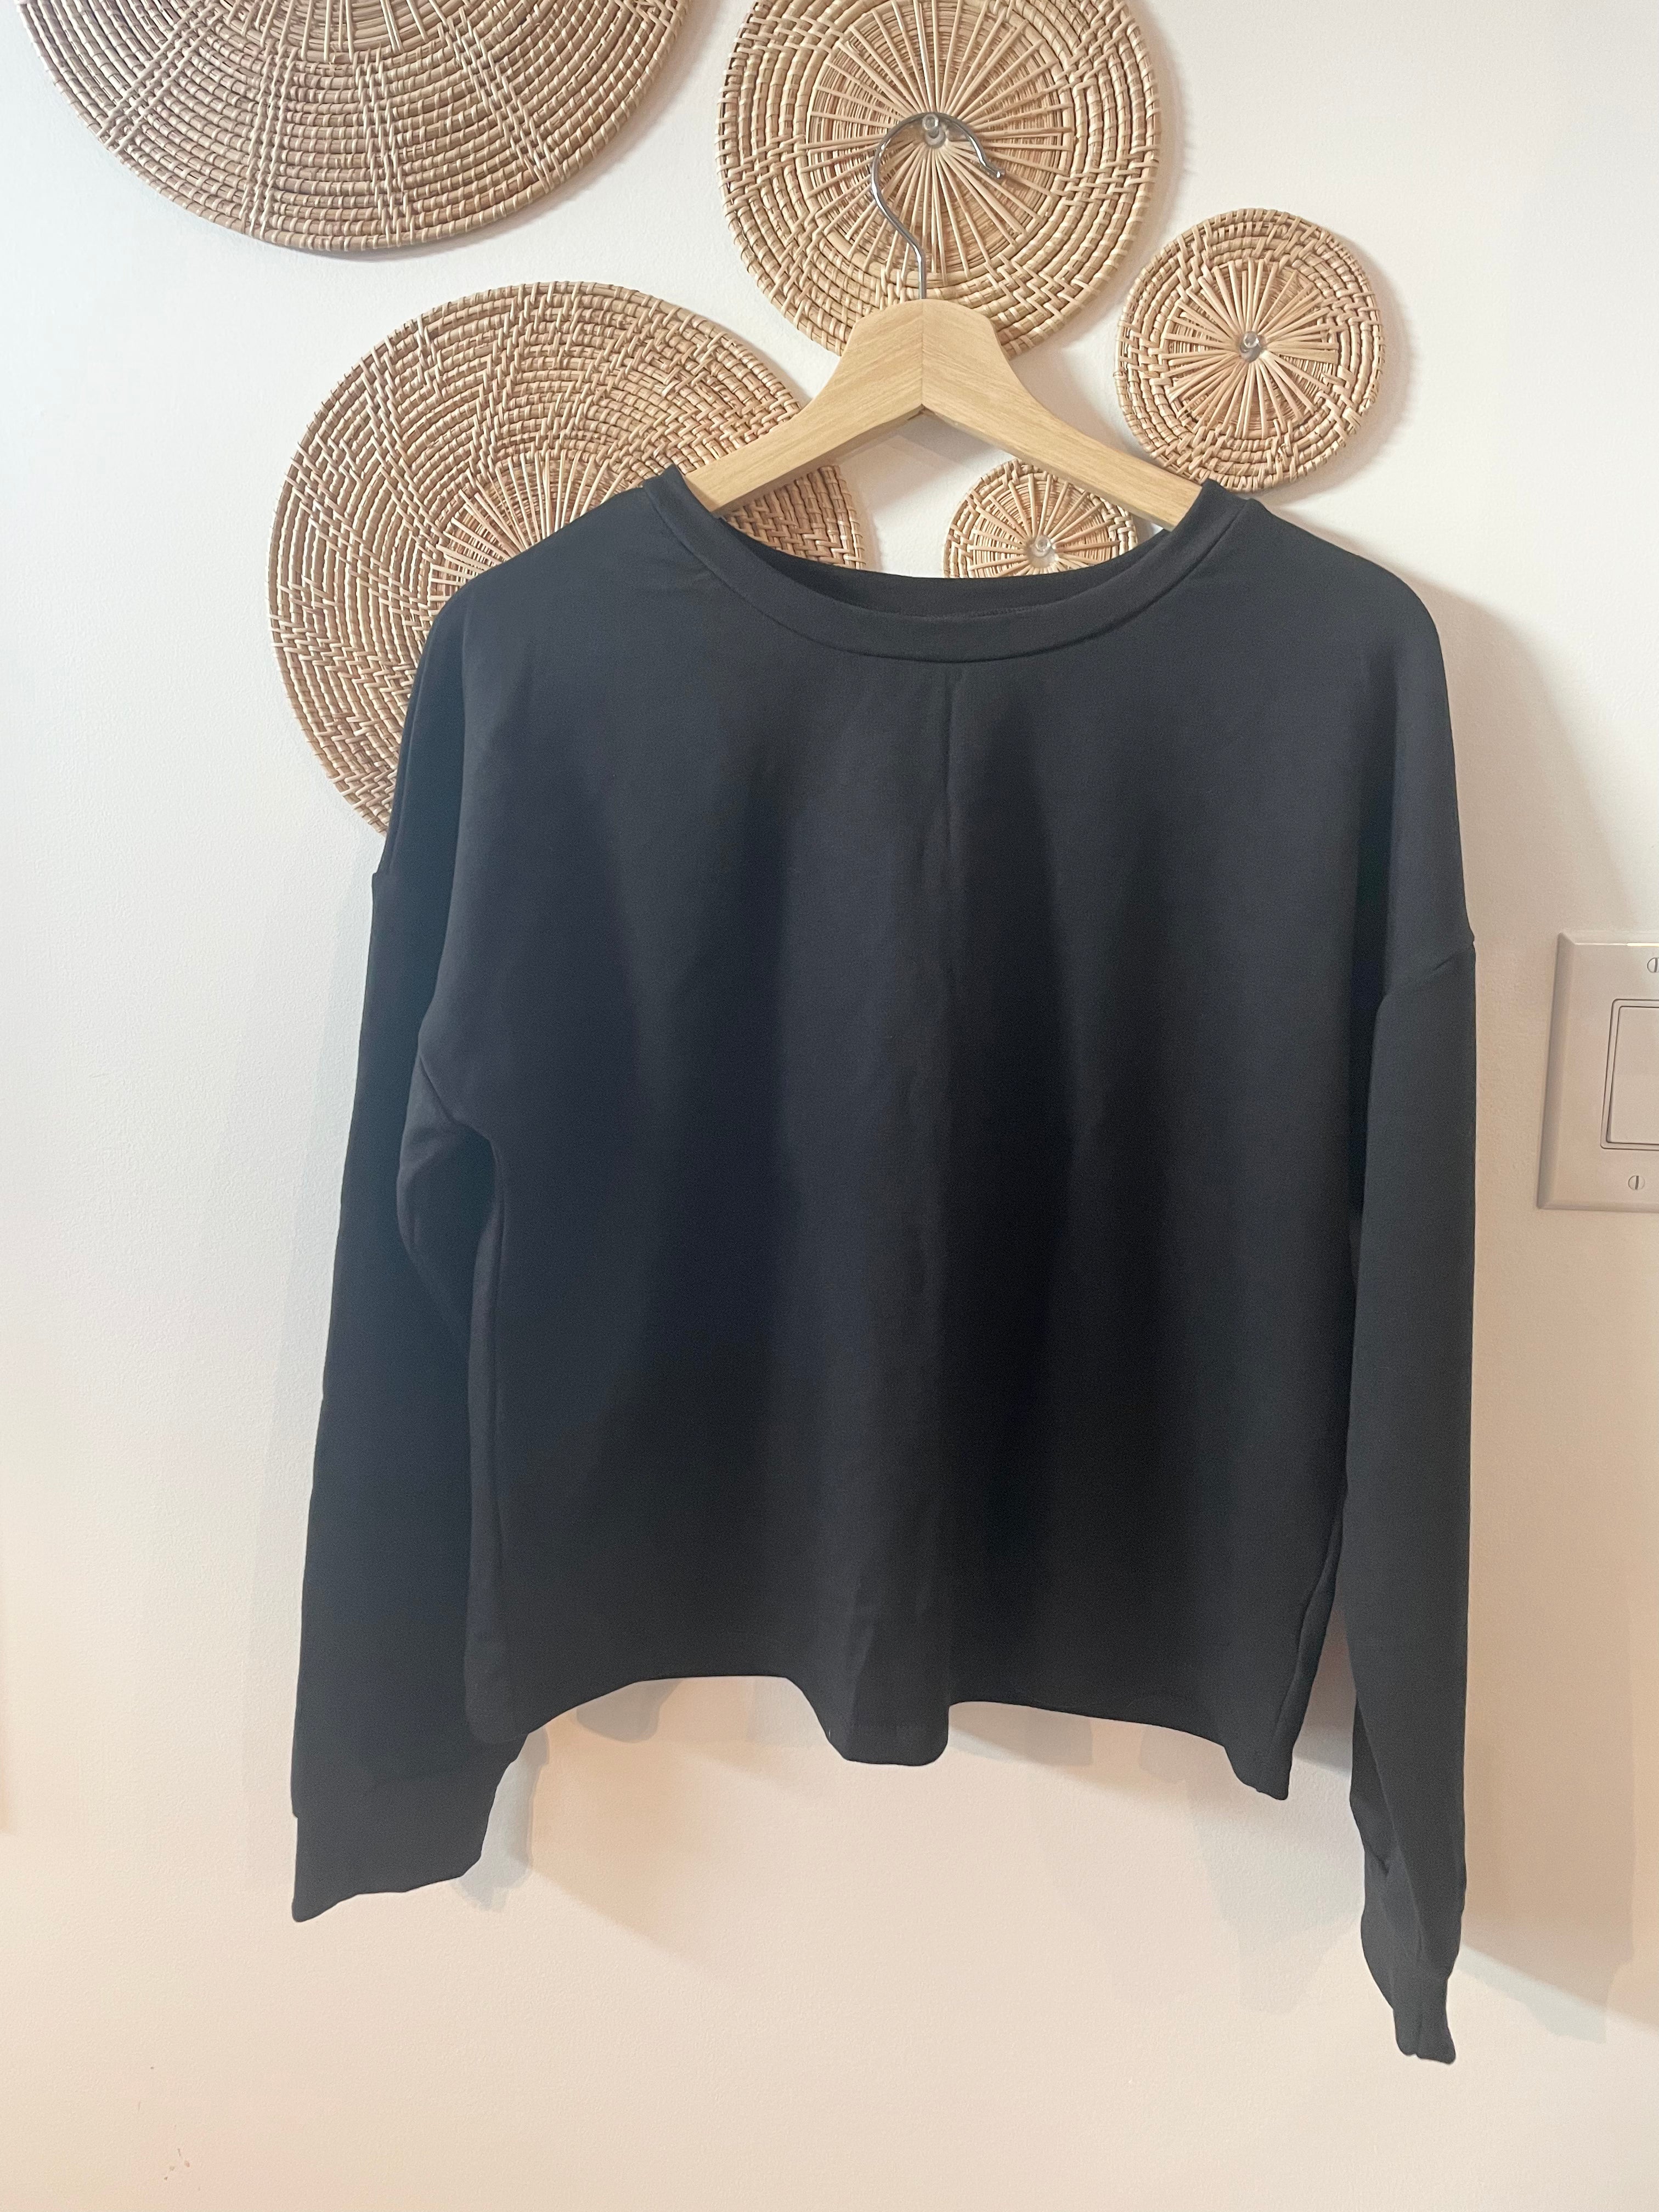 Black bamboo sweatshirt hanging on hanger